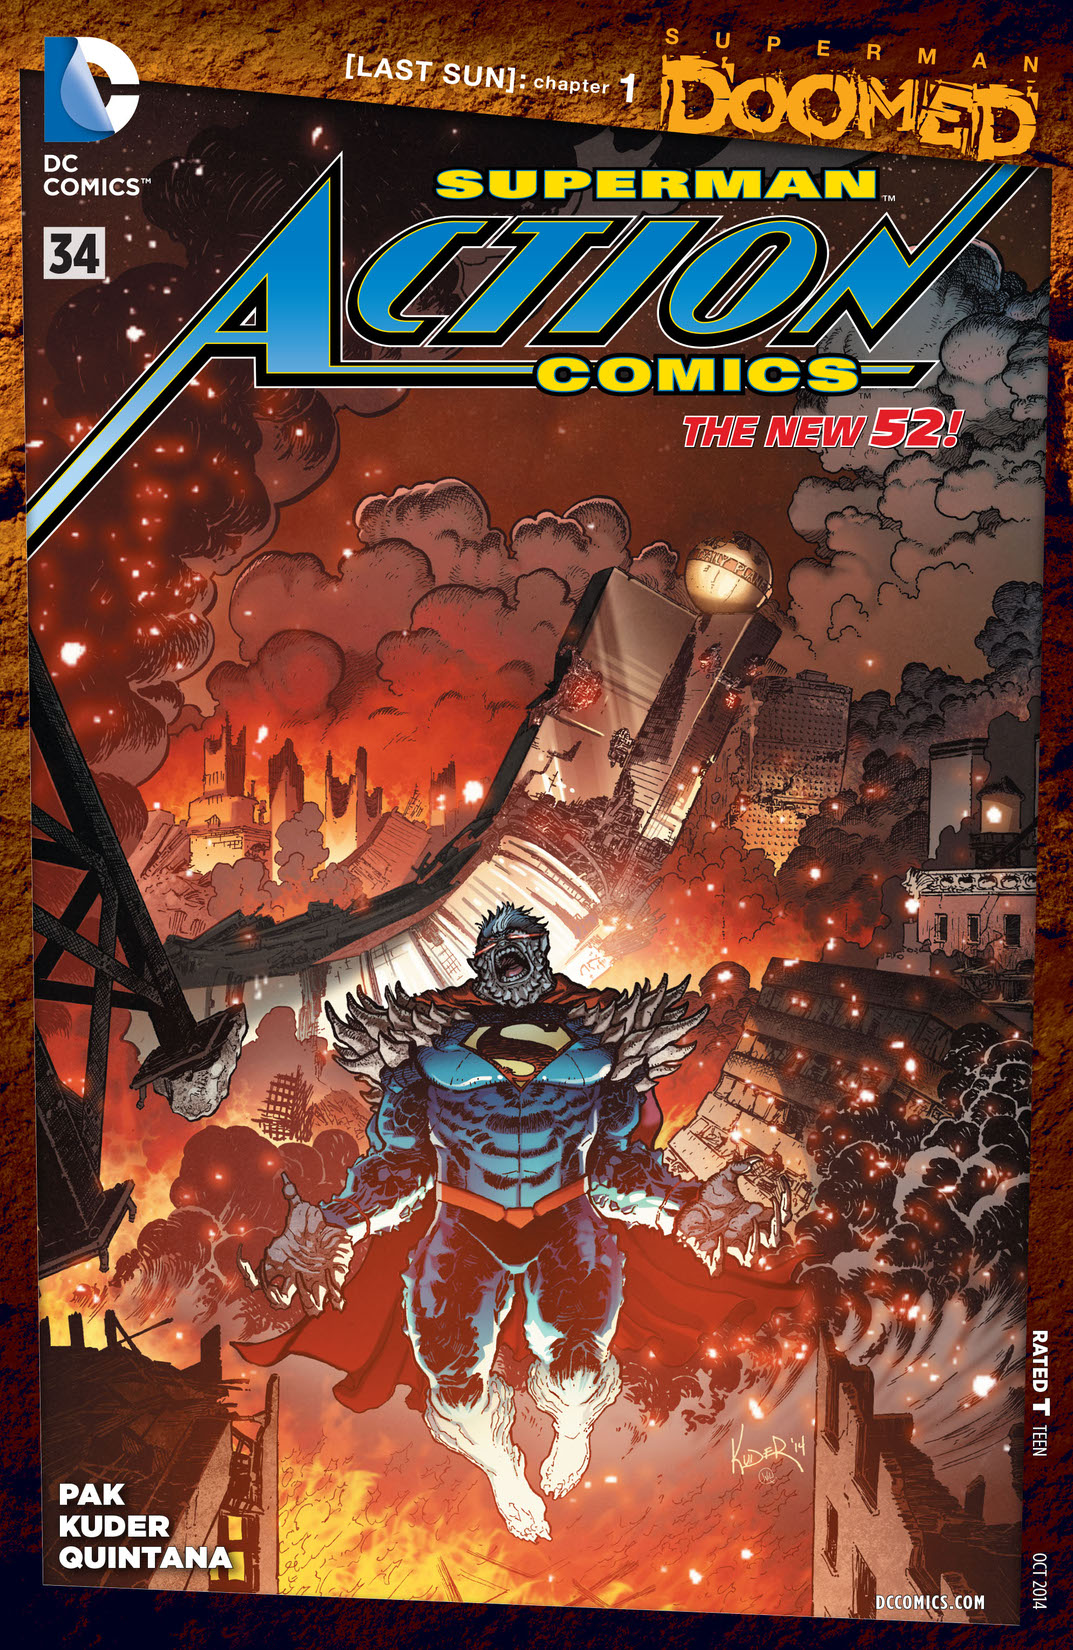 Action Comics (2011-) #34 preview images